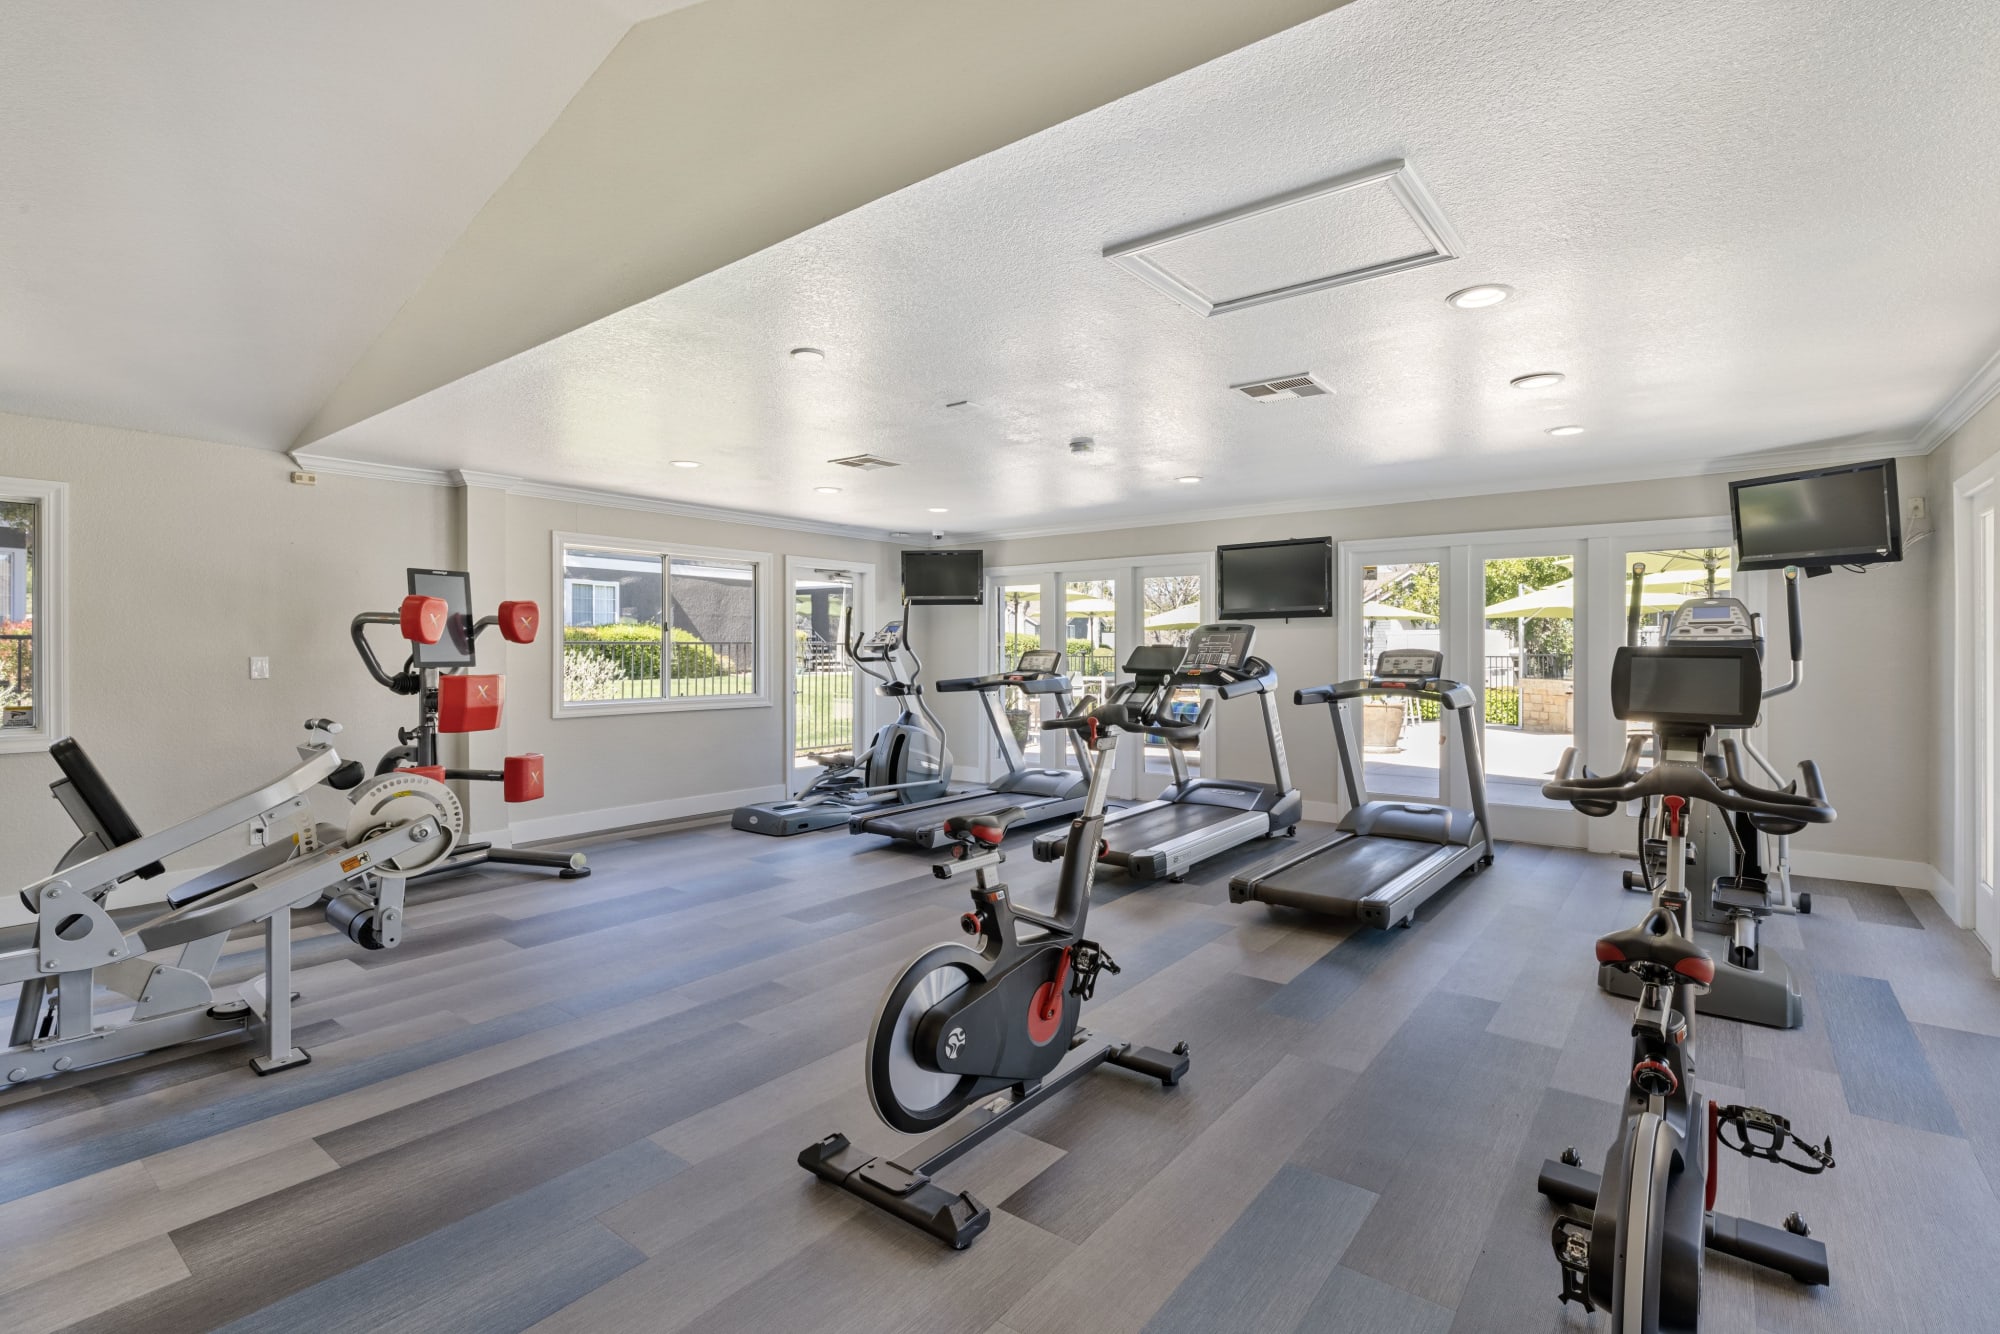 Fitness center at Village Oaks in Chino Hills, California